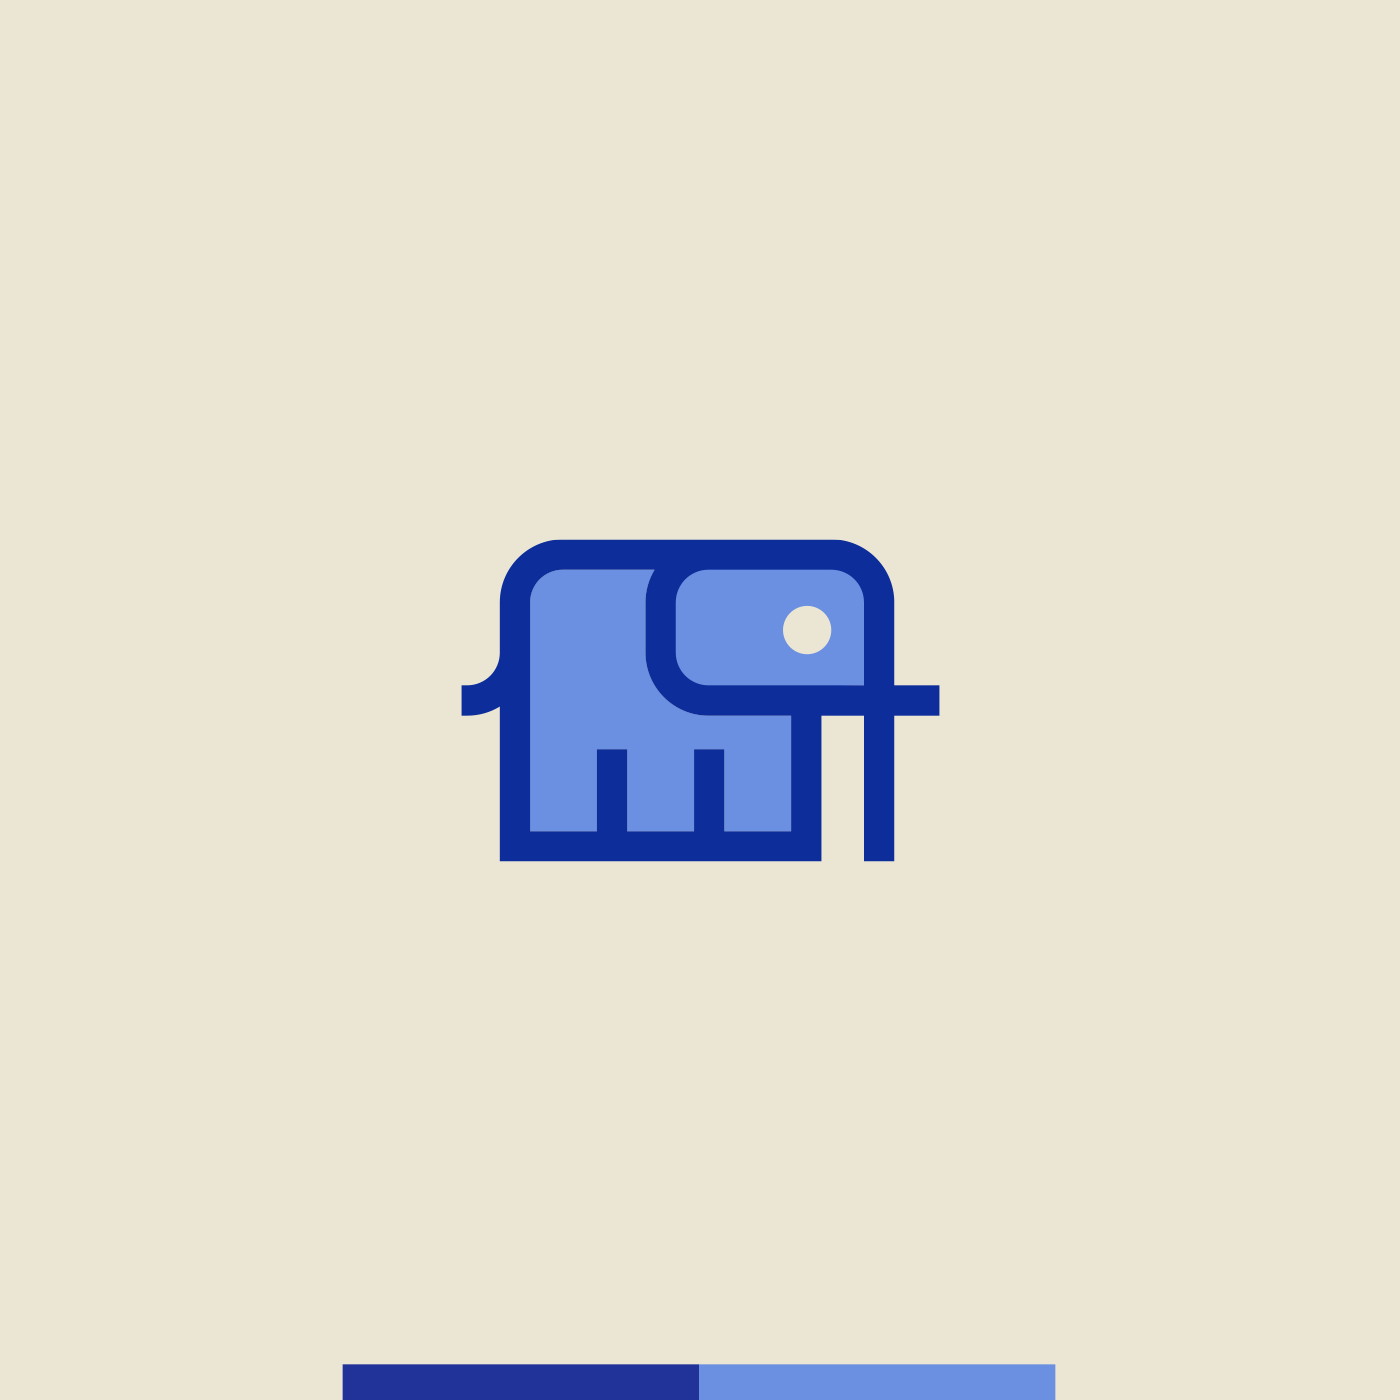 Golden Ratio blue elephant geometric